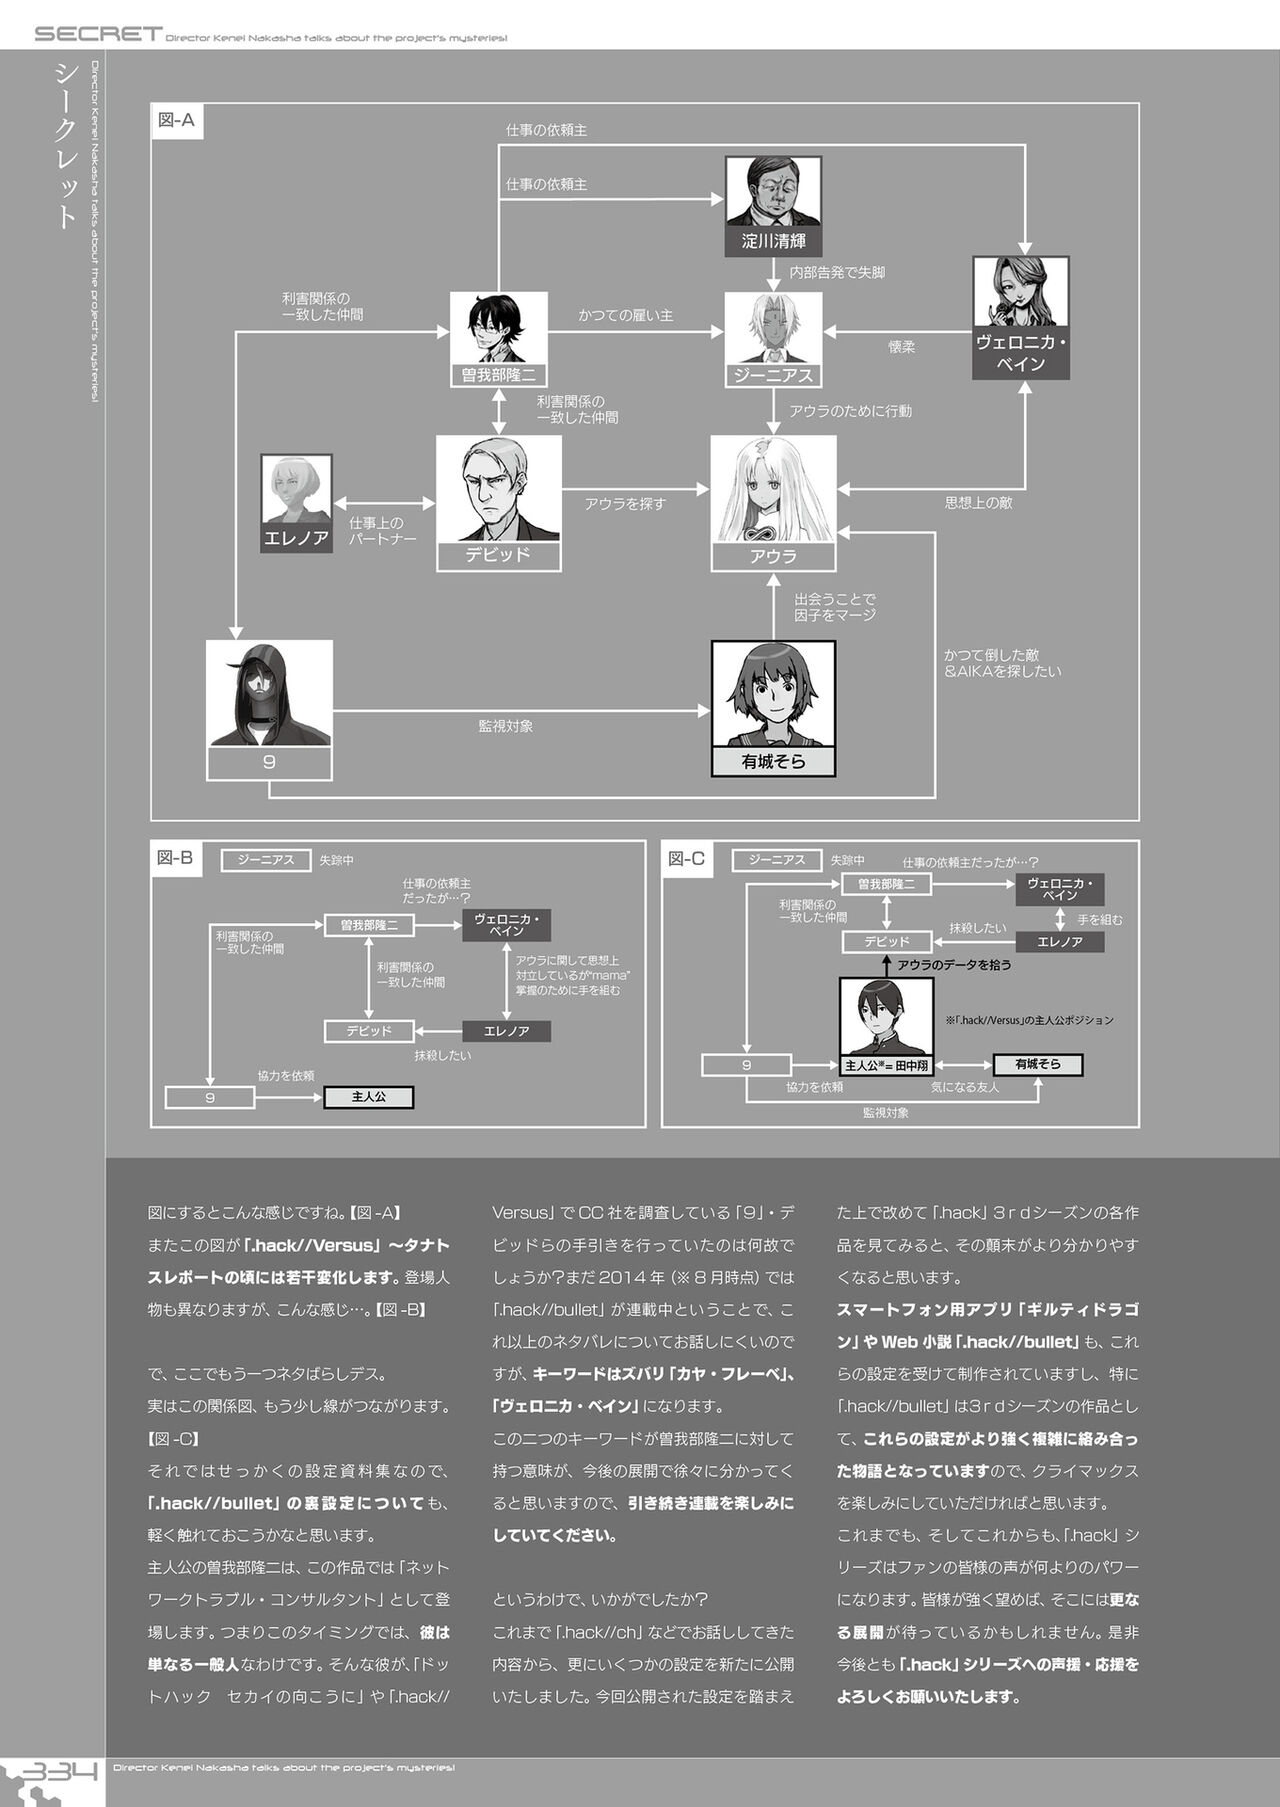 Dot Hack Sekai-no Muko ni  +Versus Complete Set  Documentation .hack //Archives _ 05 336